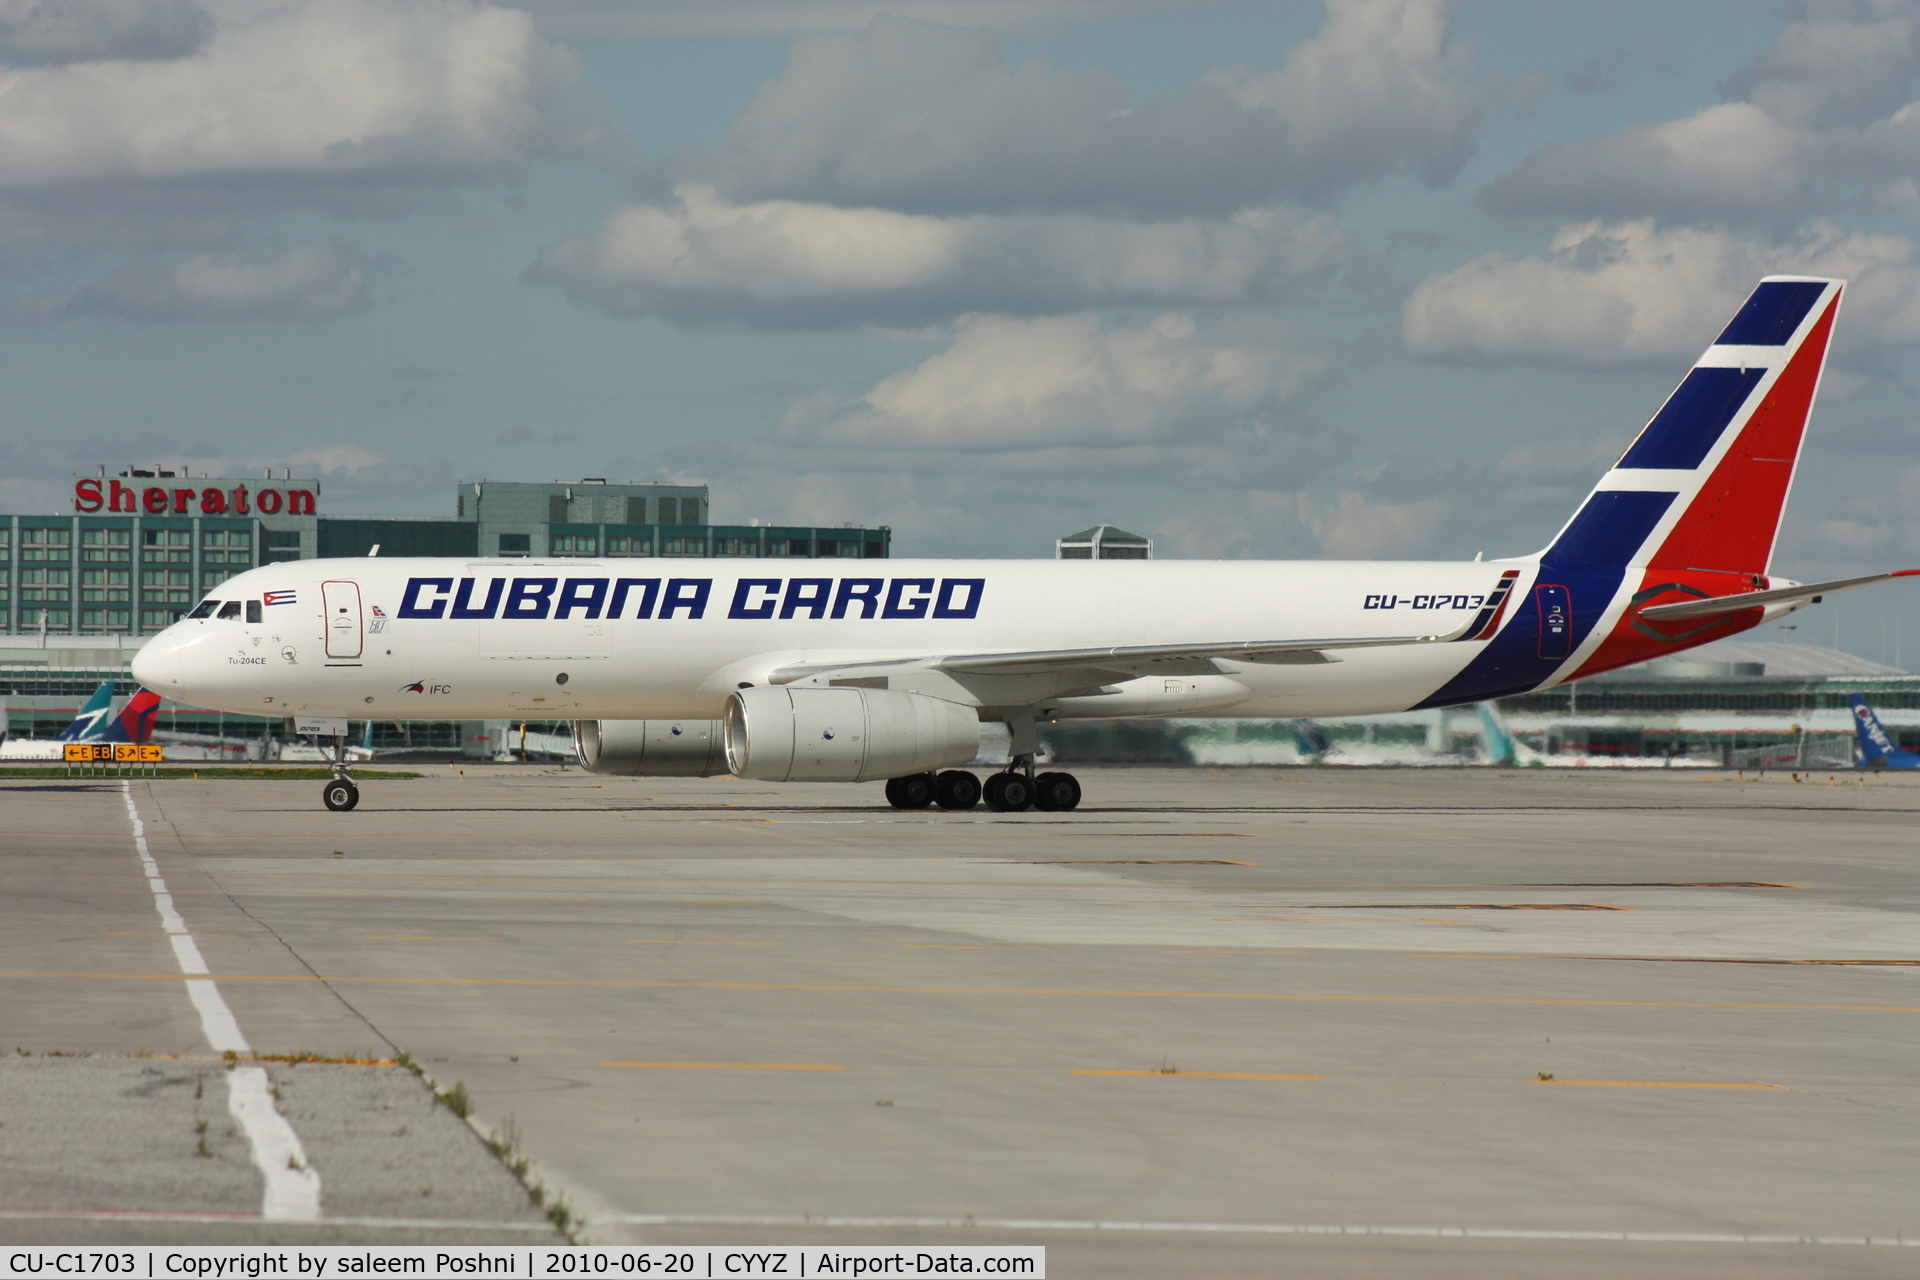 CU-C1703, 2008 Tupolev Tu-204CE C/N 145074-64037, Cubana Cargo taxing to cargo terminal beside U.S.A.F C17